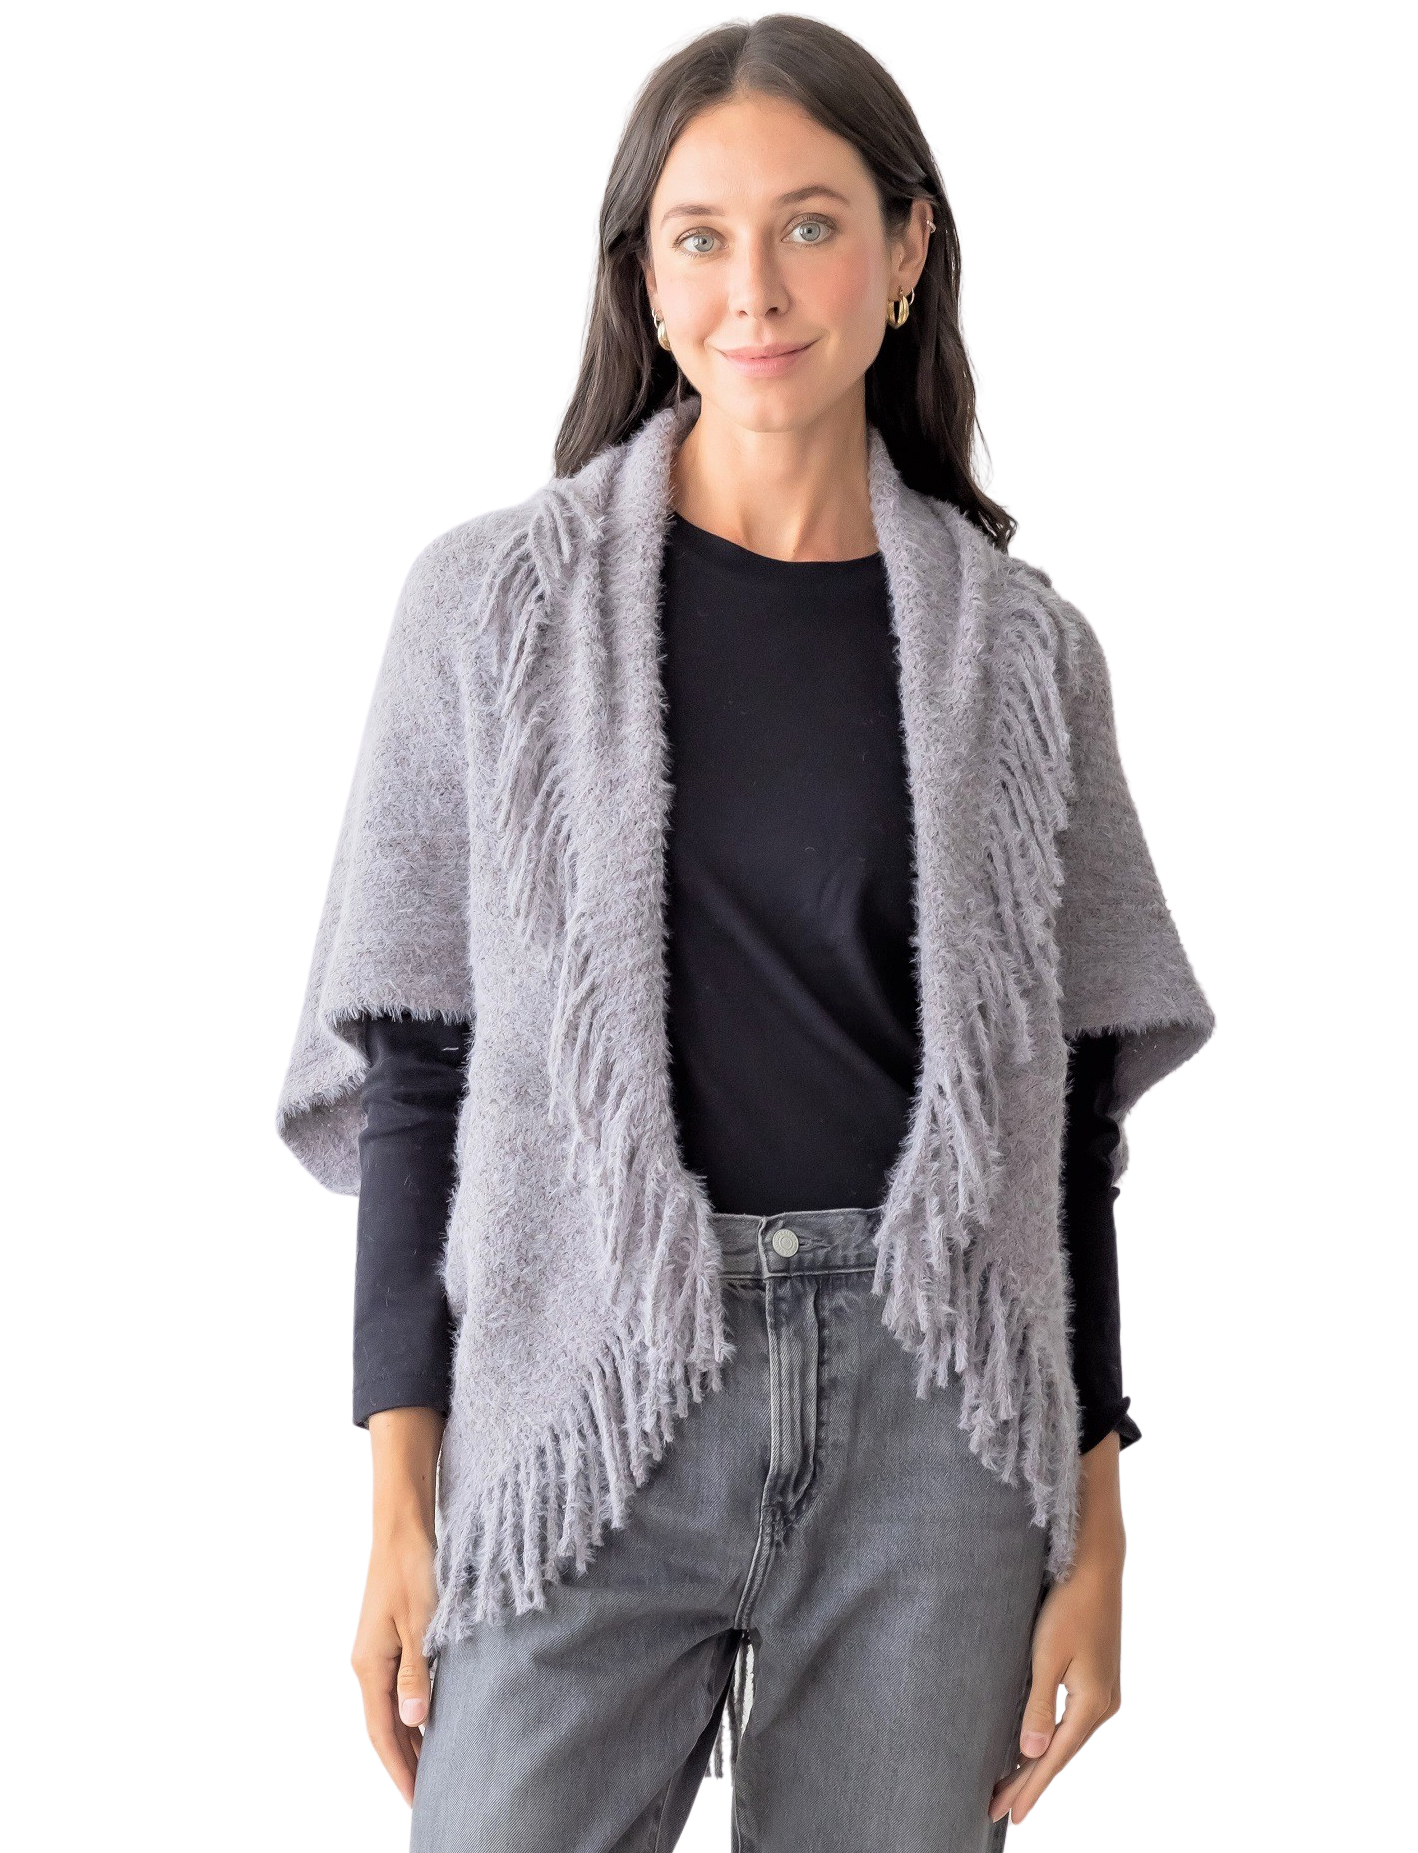 wholesale 5118 - Cozy Crochet Shrug w/ Tassels